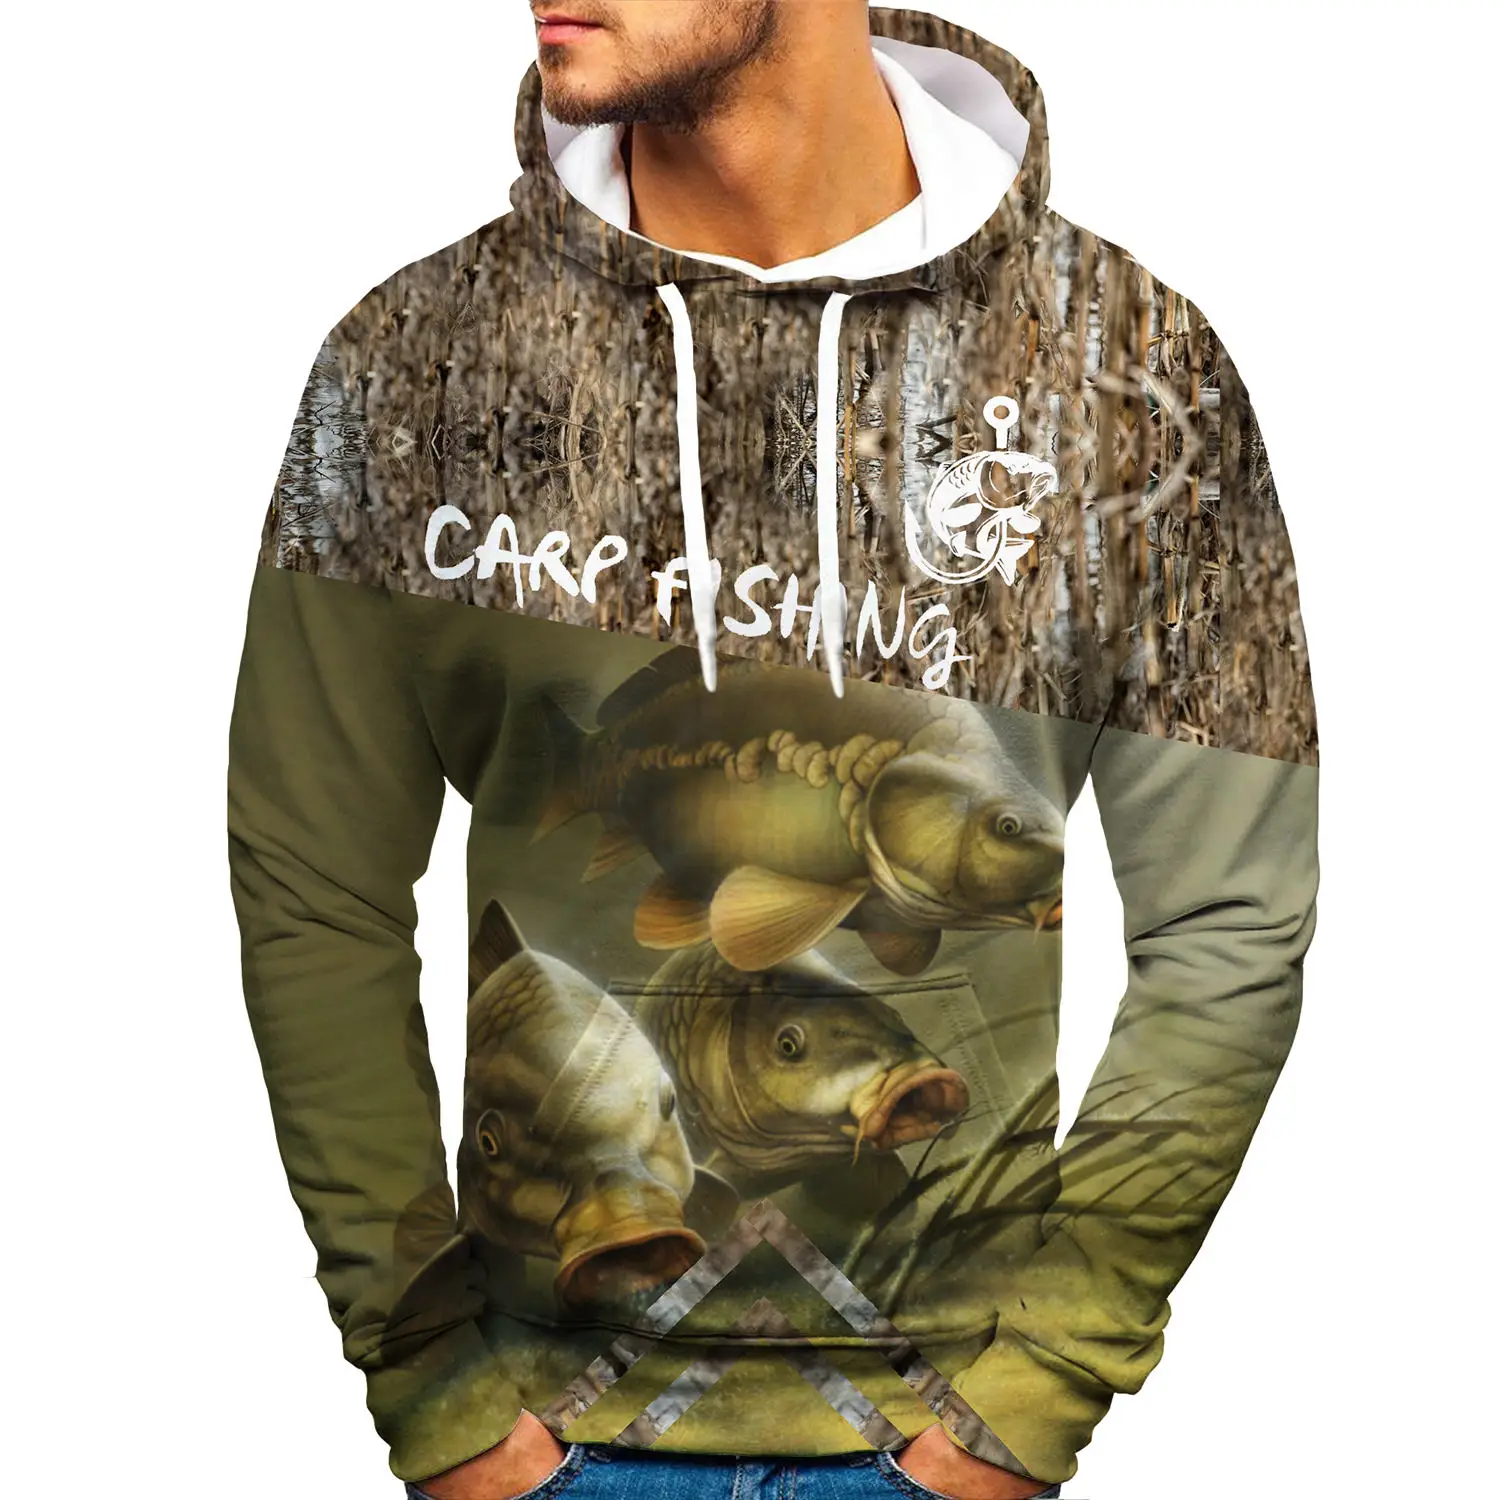 Cool Carp Fish Hoodie Personality Animal 3d Print Hoodies Casual Funny Long Sleeves Fashion Fishing Pullover Unisex Sweatshirts